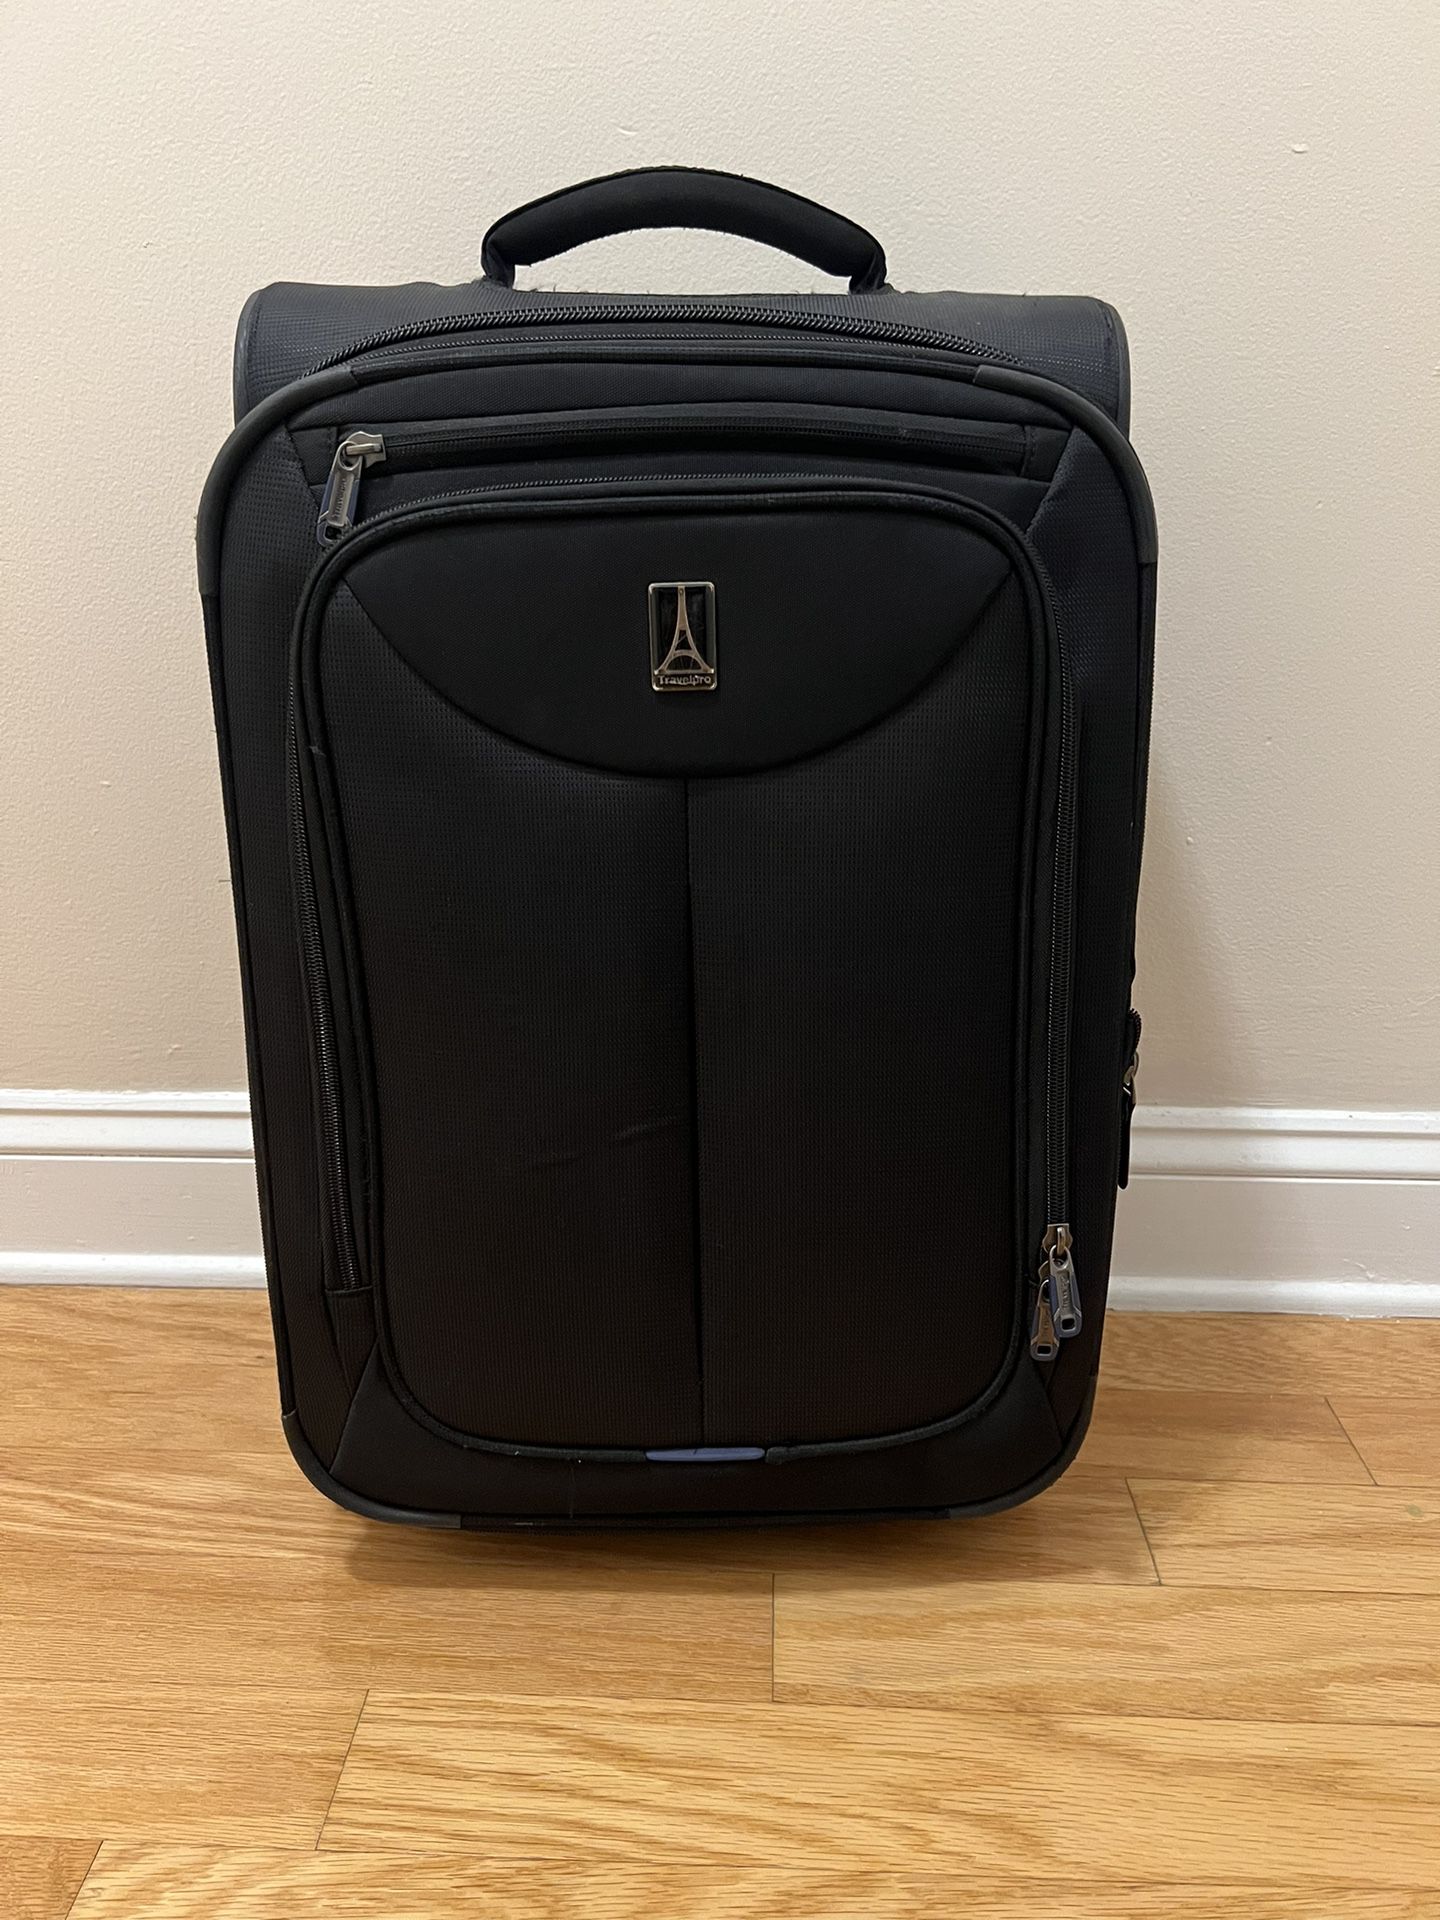 TravelPro Carryon Suitcase